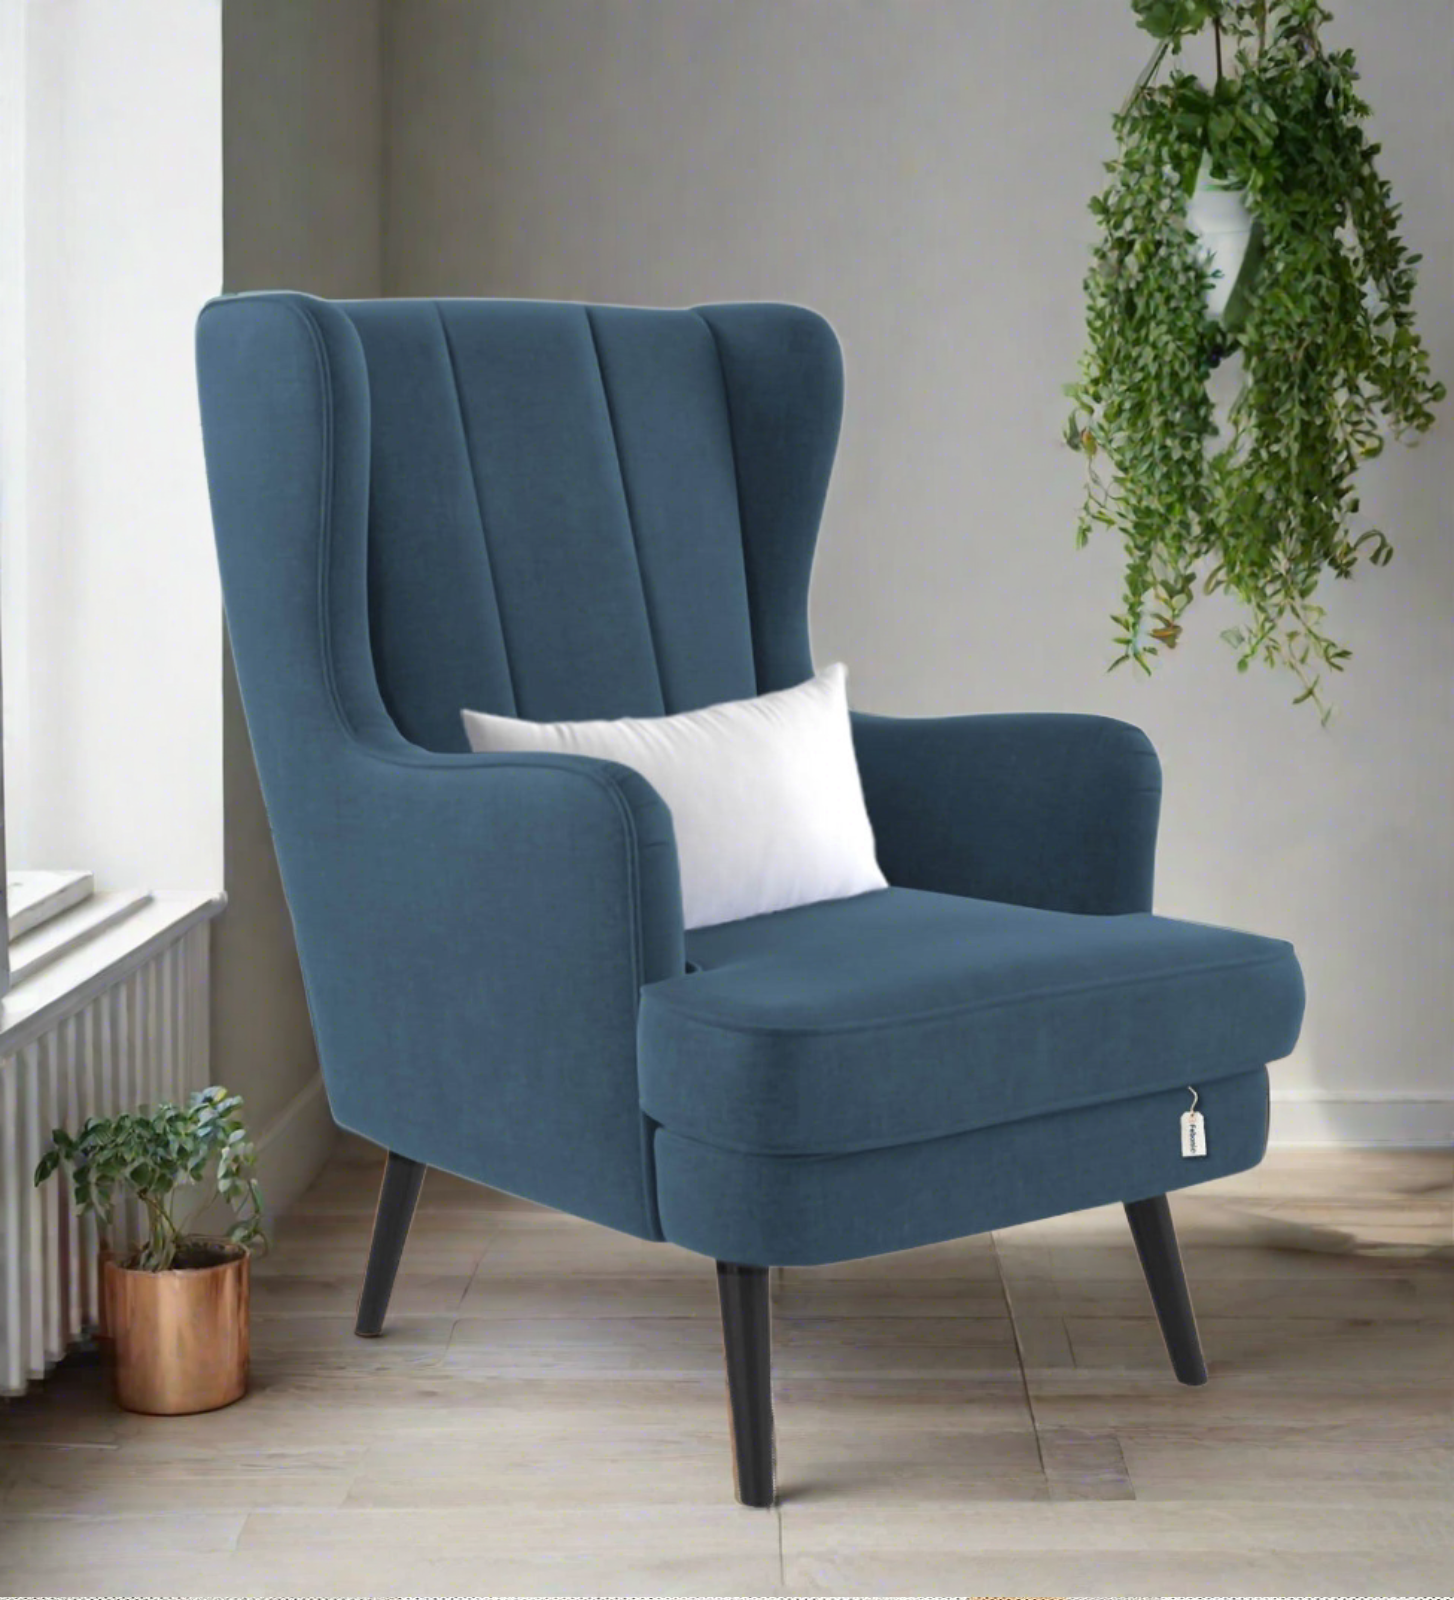 Nia Velvet Wing Chair in Oxford Blue Colour